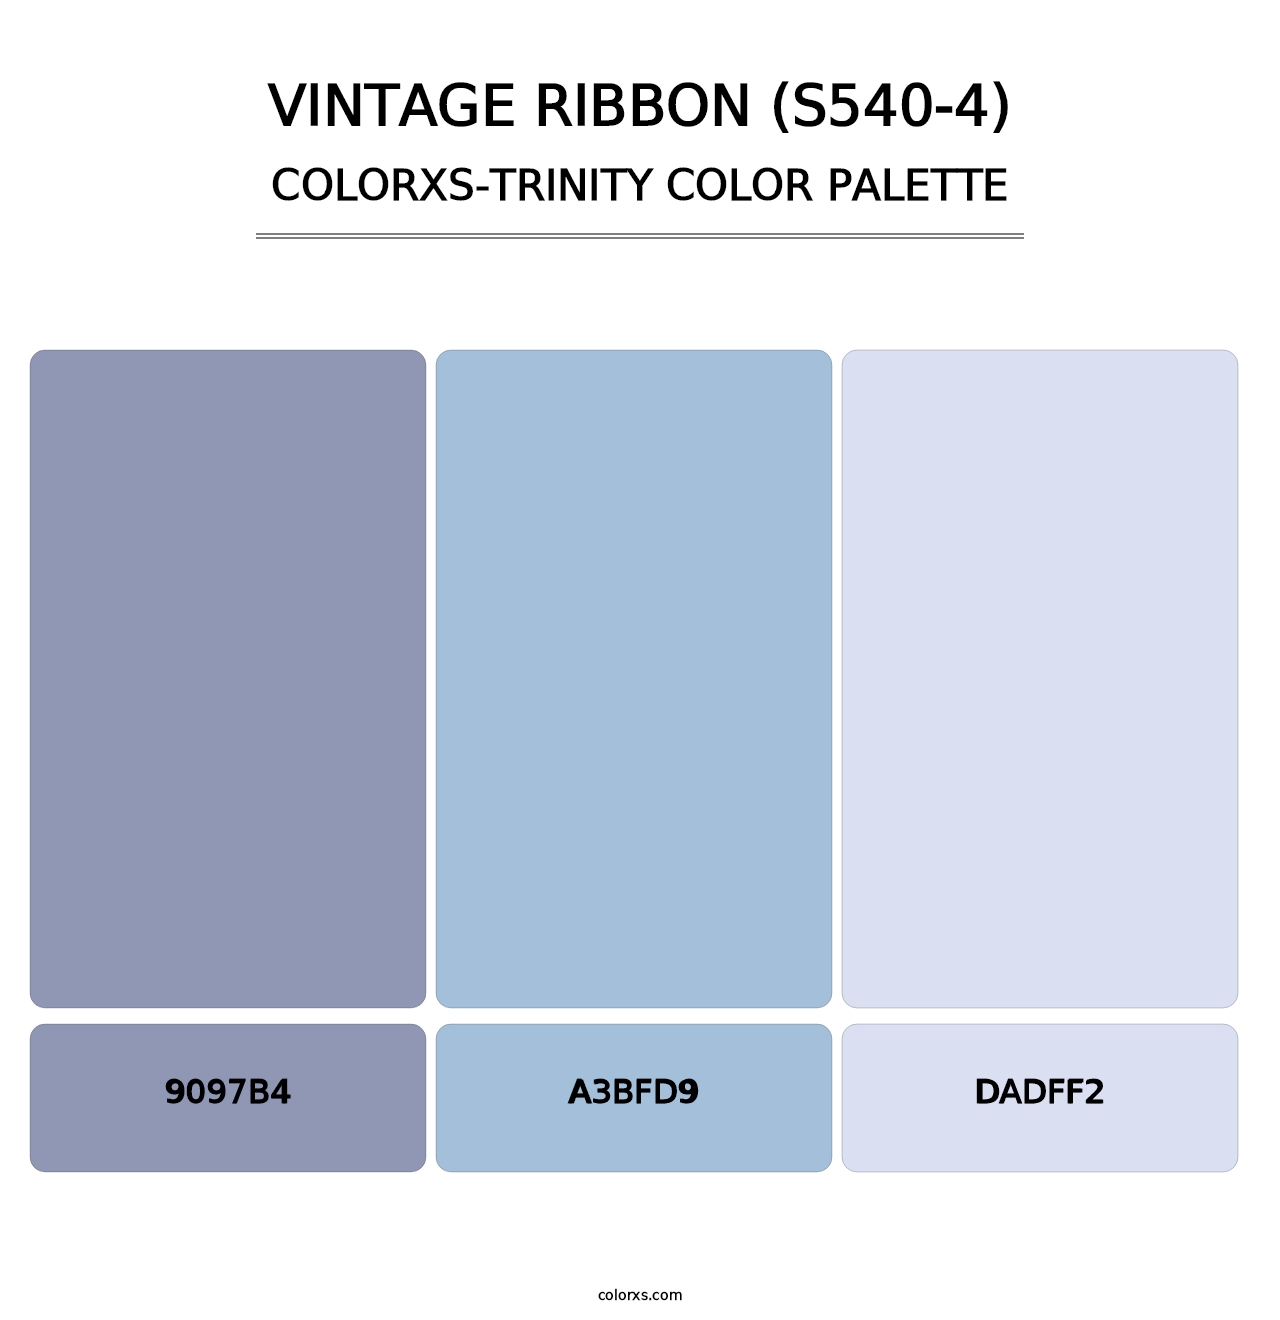 Vintage Ribbon (S540-4) - Colorxs Trinity Palette